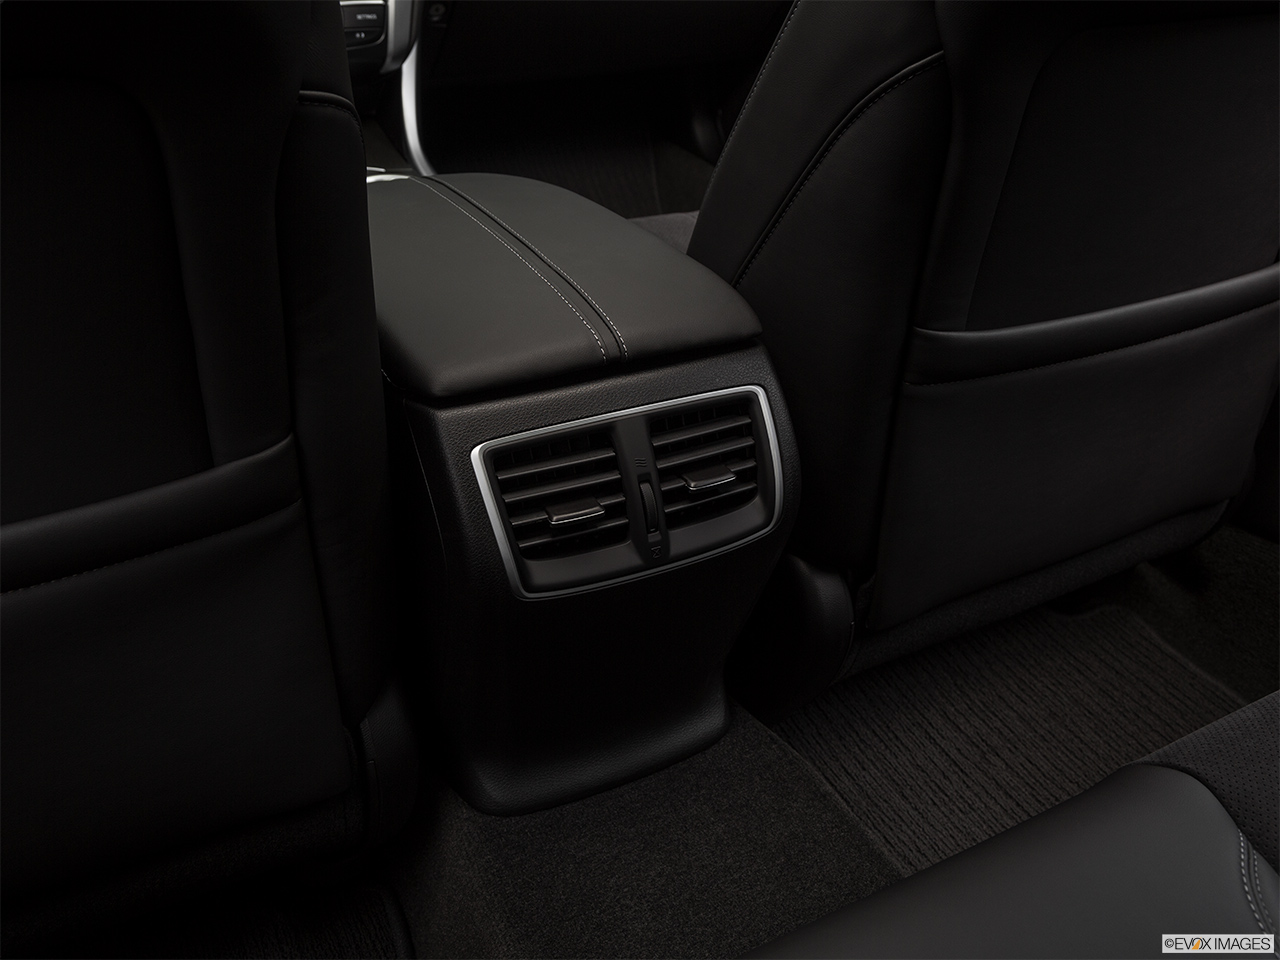 2020 Acura TLX 3.5L Rear A/C controls. 